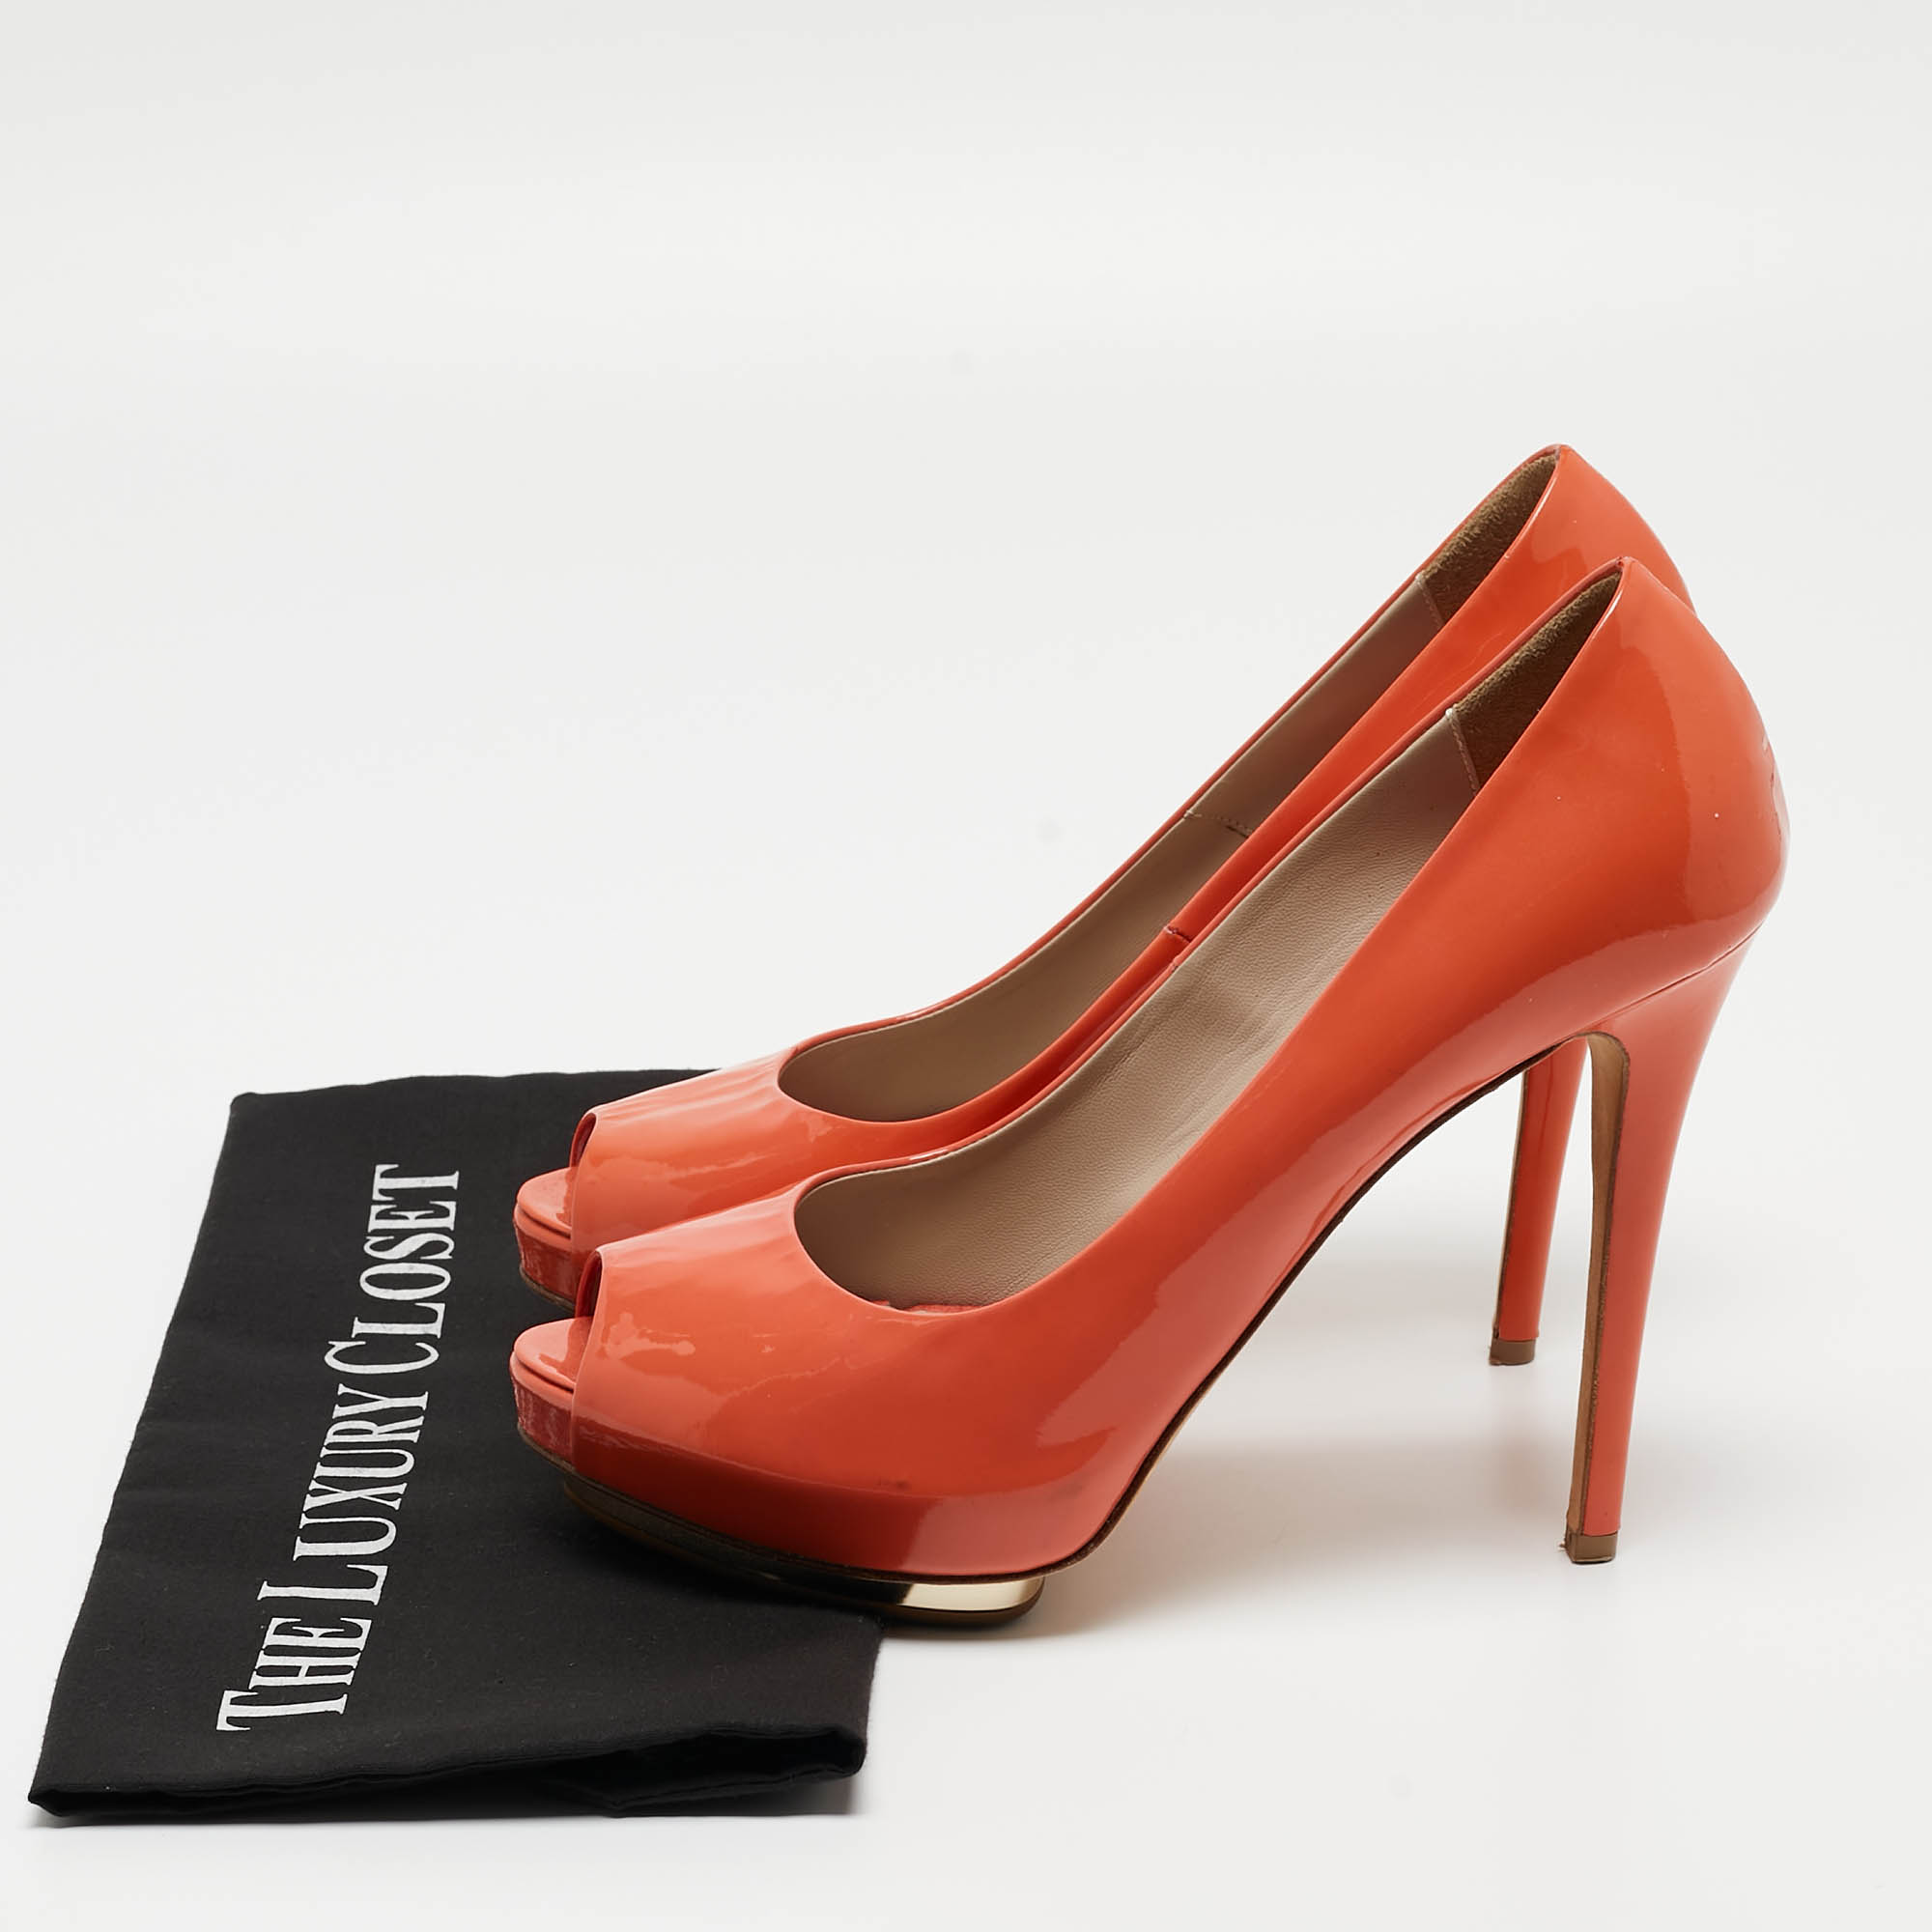 Le Silla Orange Patent Peep Toe Pumps Size 39.5